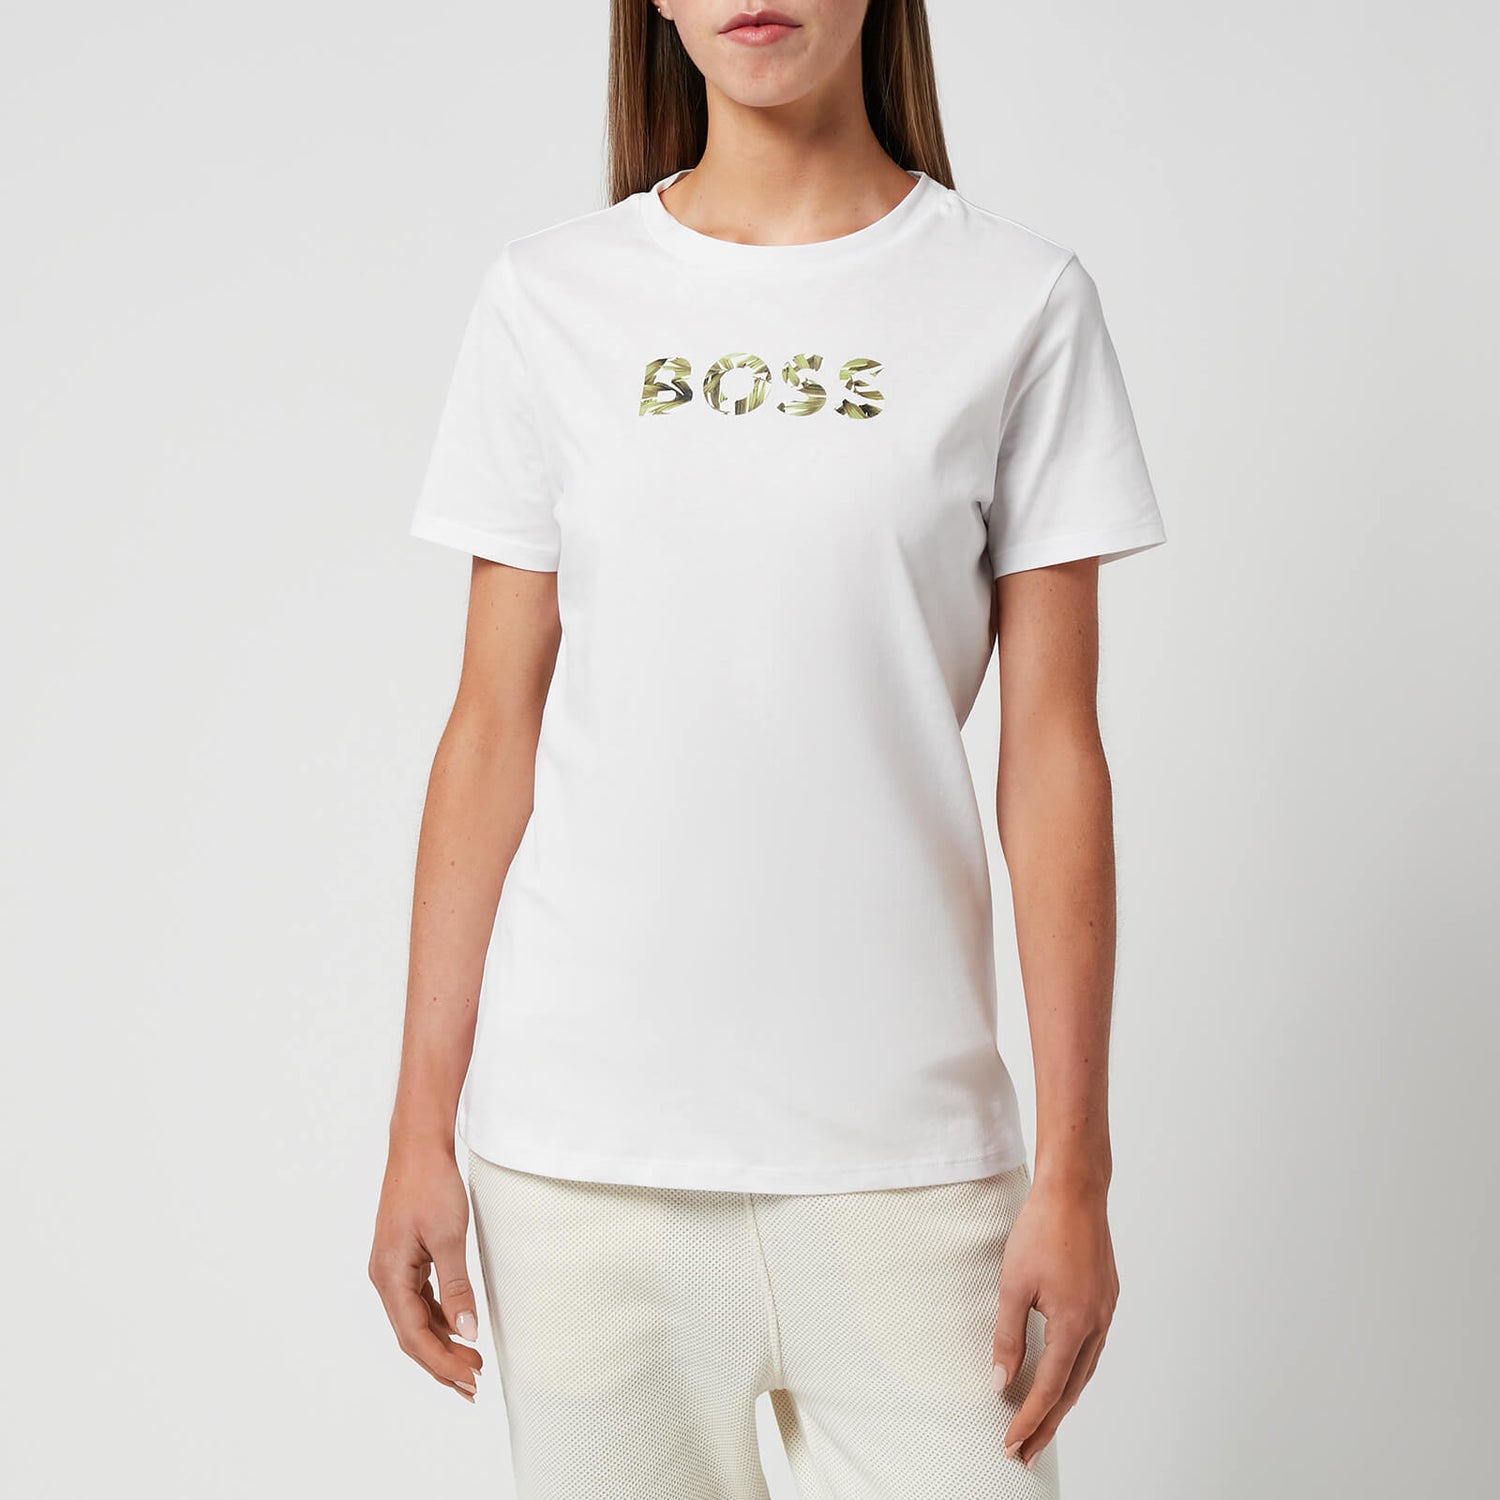 BOSS Women's Elogo T-Shirt - White - XS